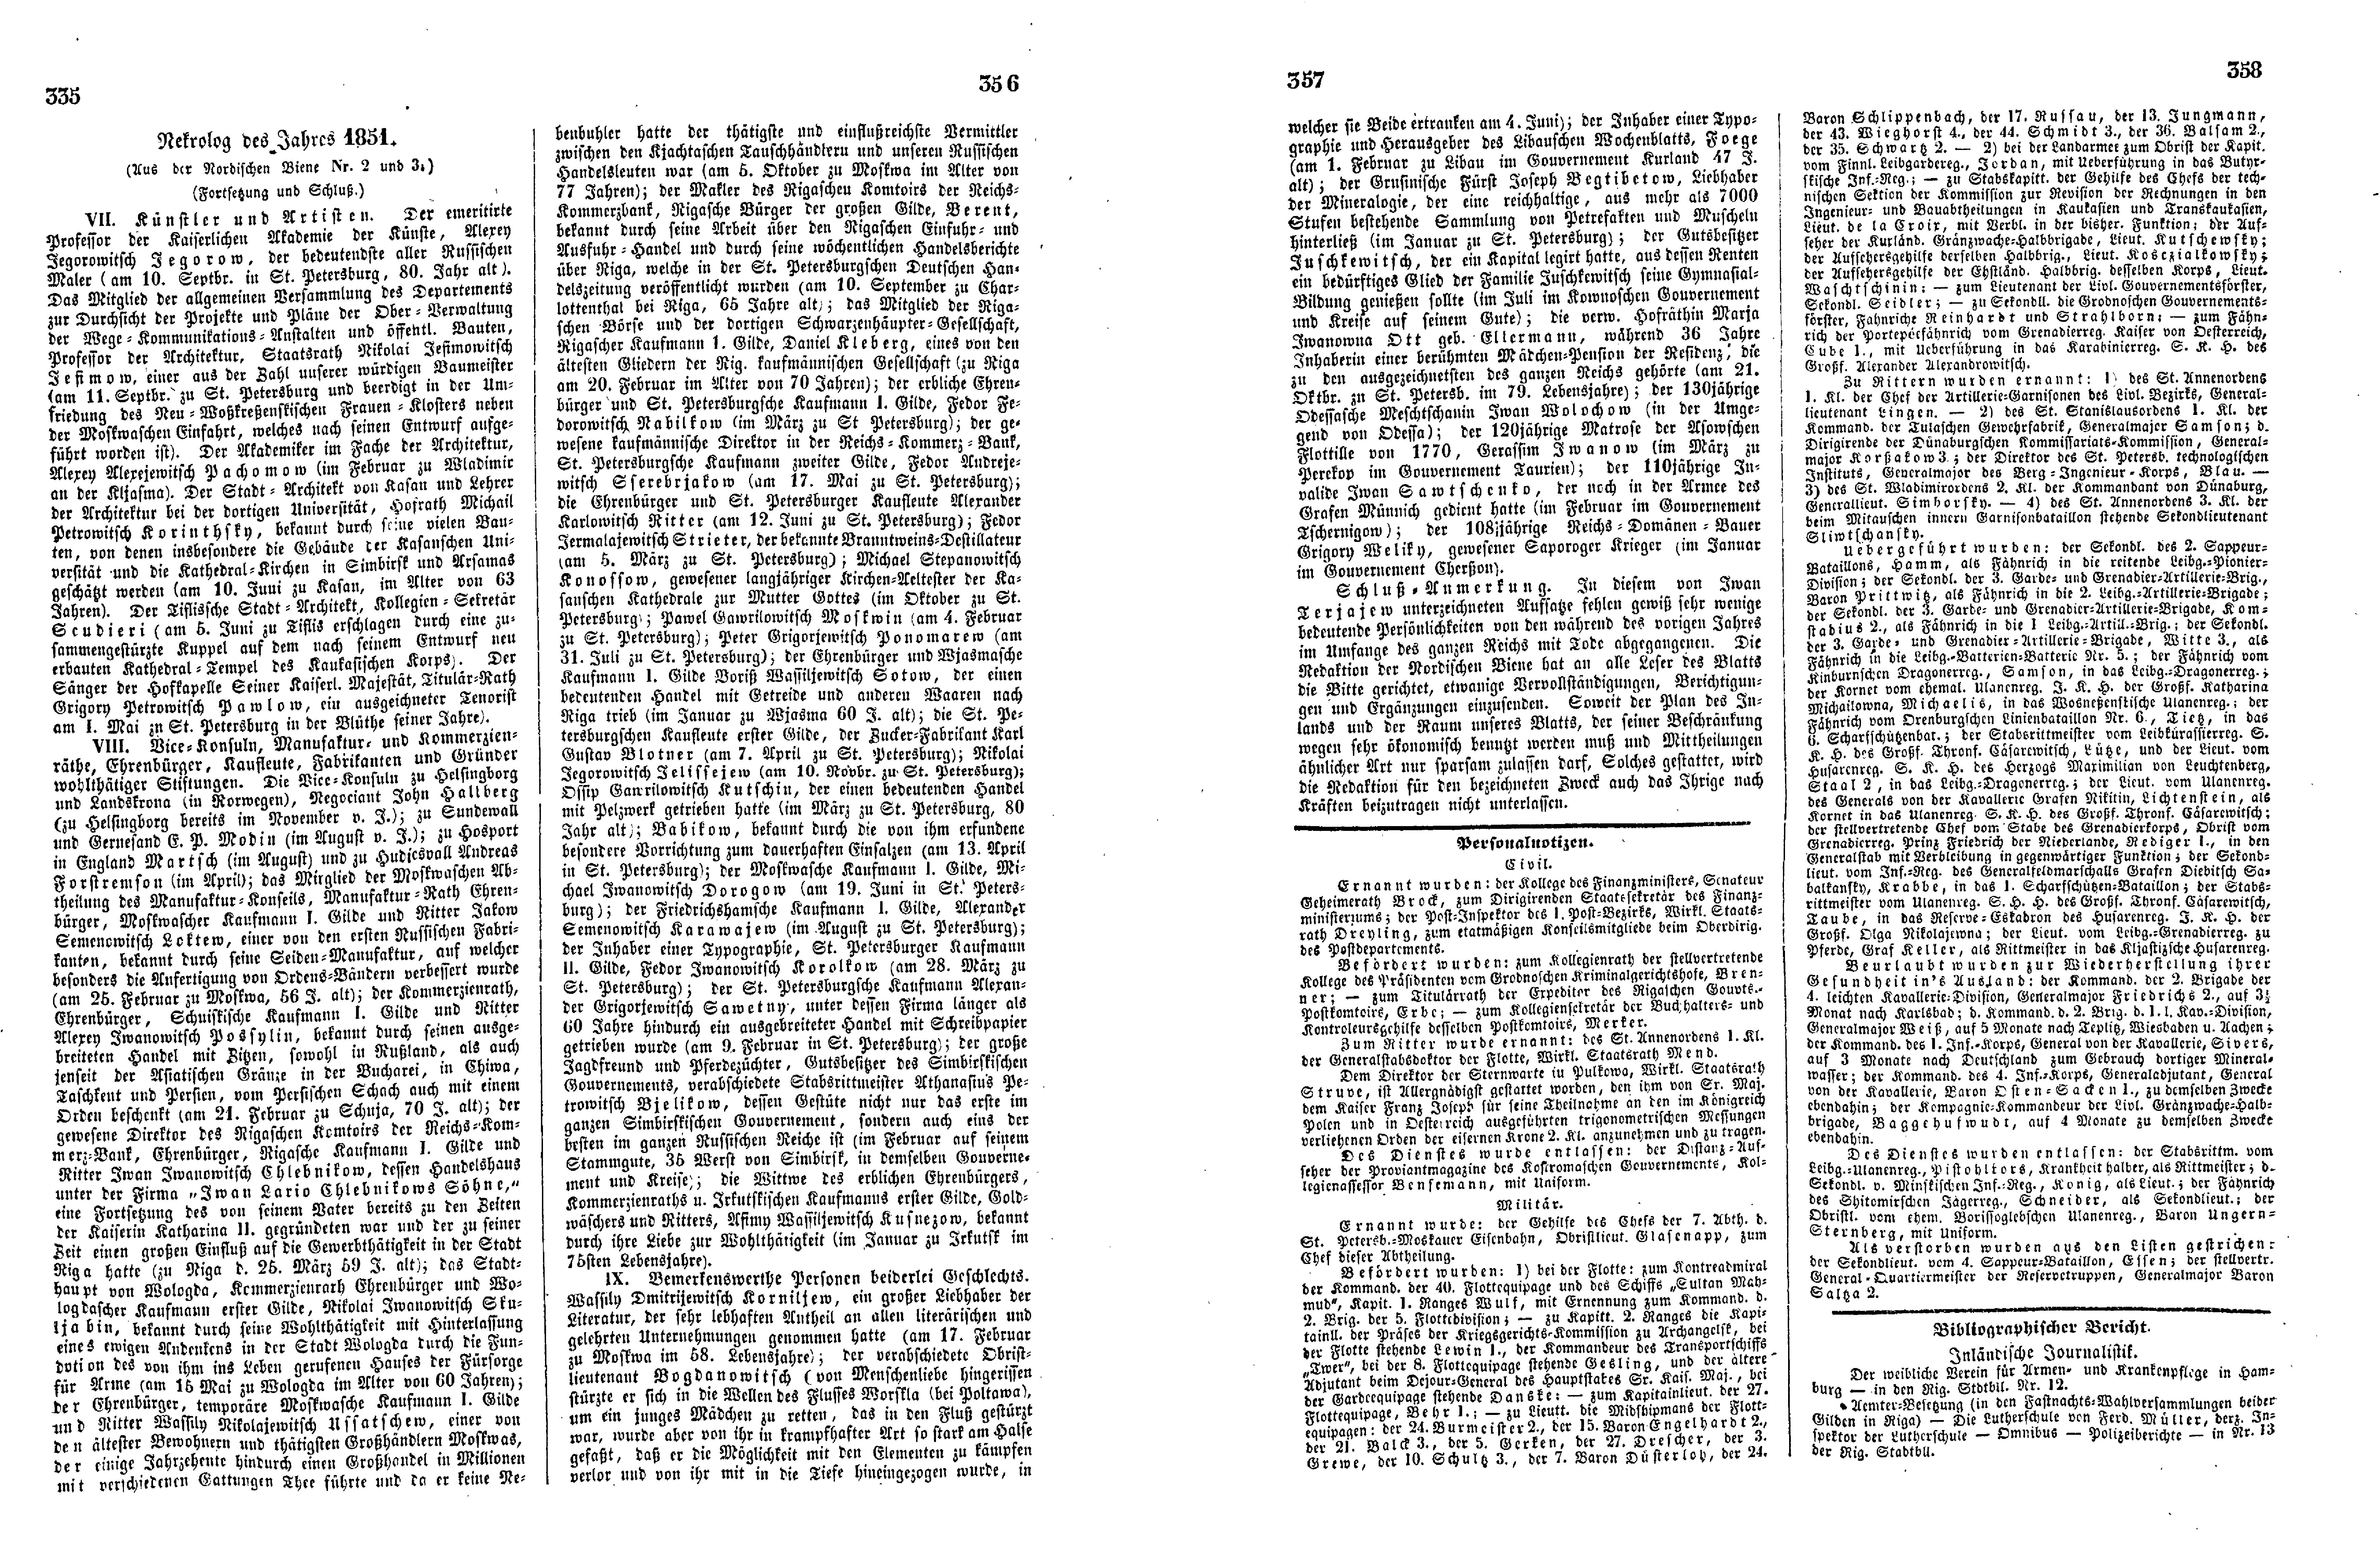 Das Inland [17] (1852) | 93. (355-358) Main body of text